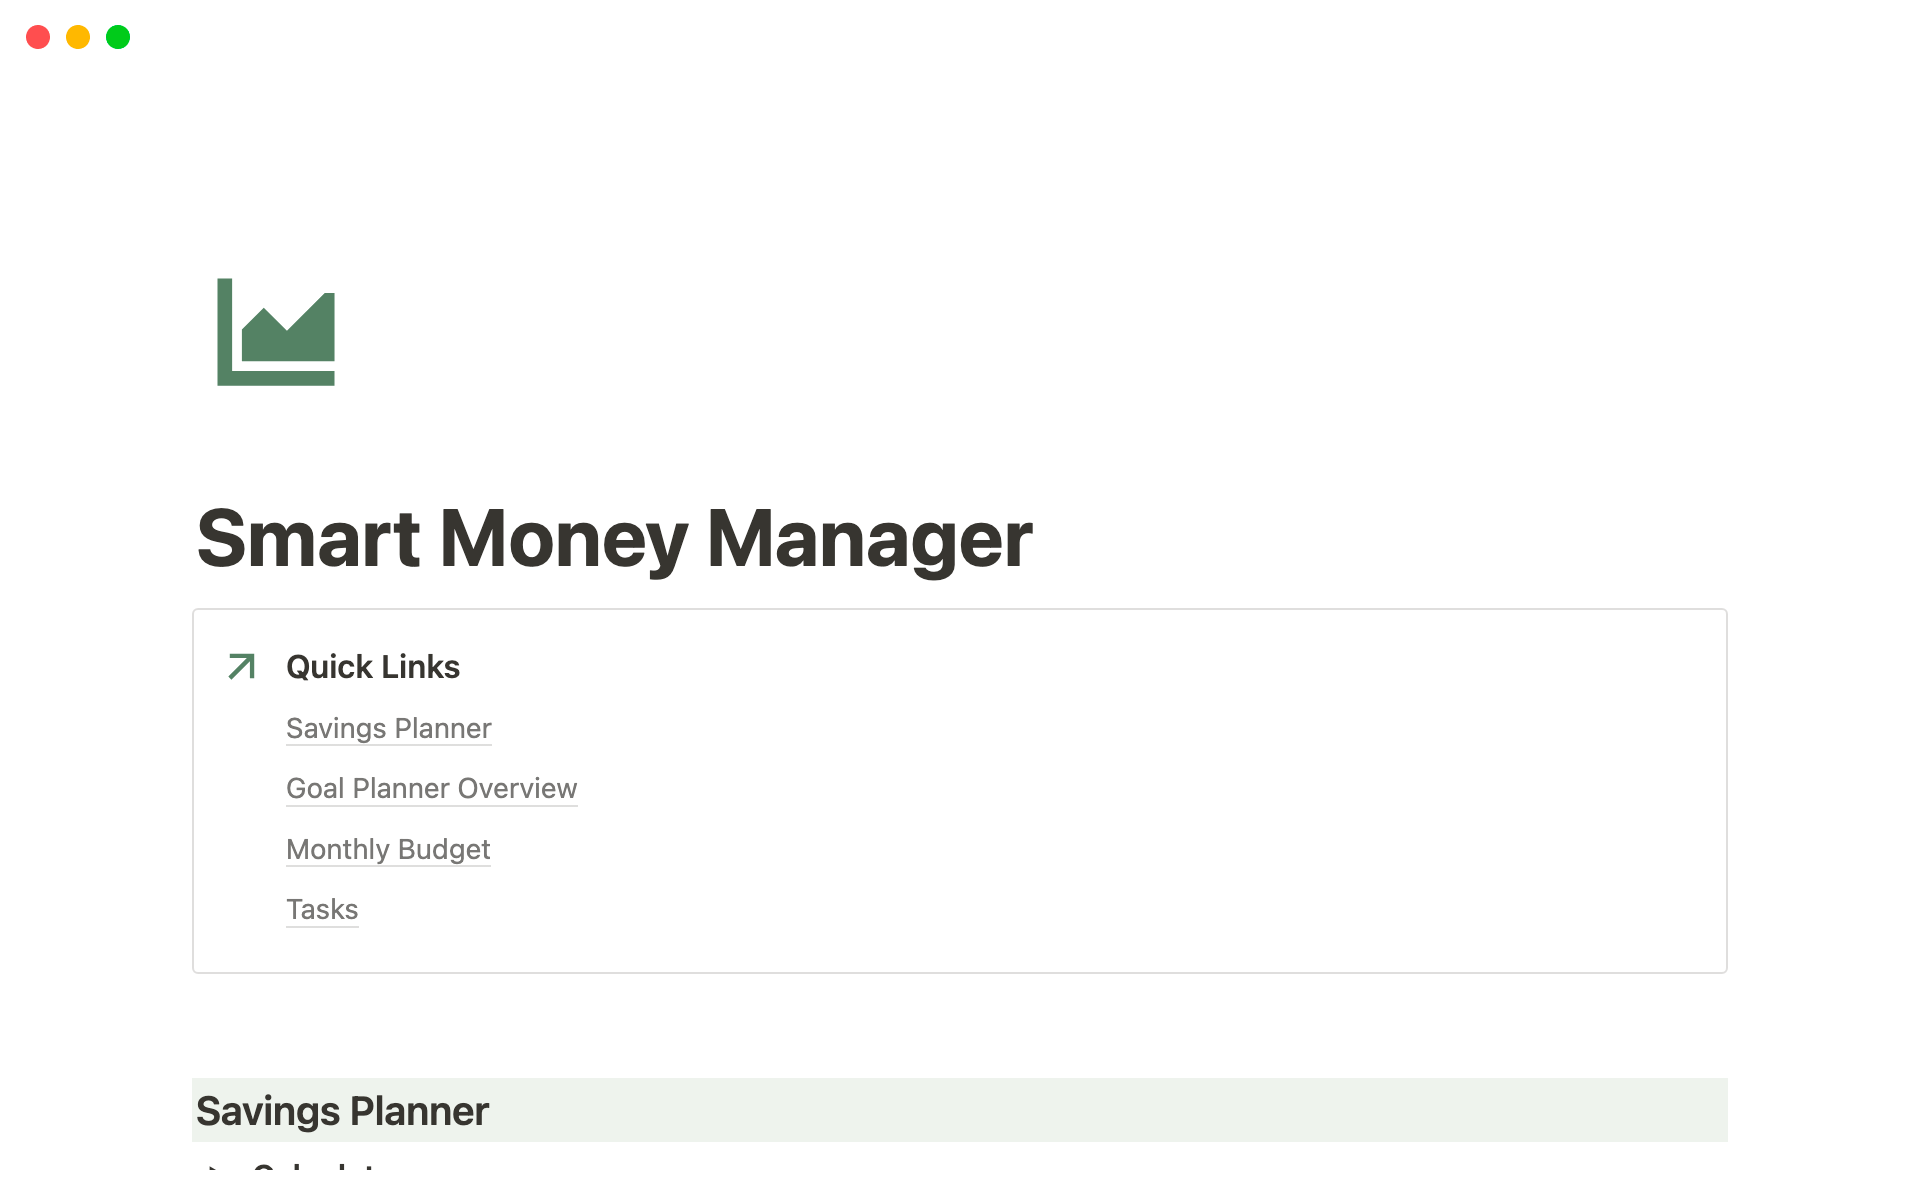 Vista previa de plantilla para Smart Money Manager